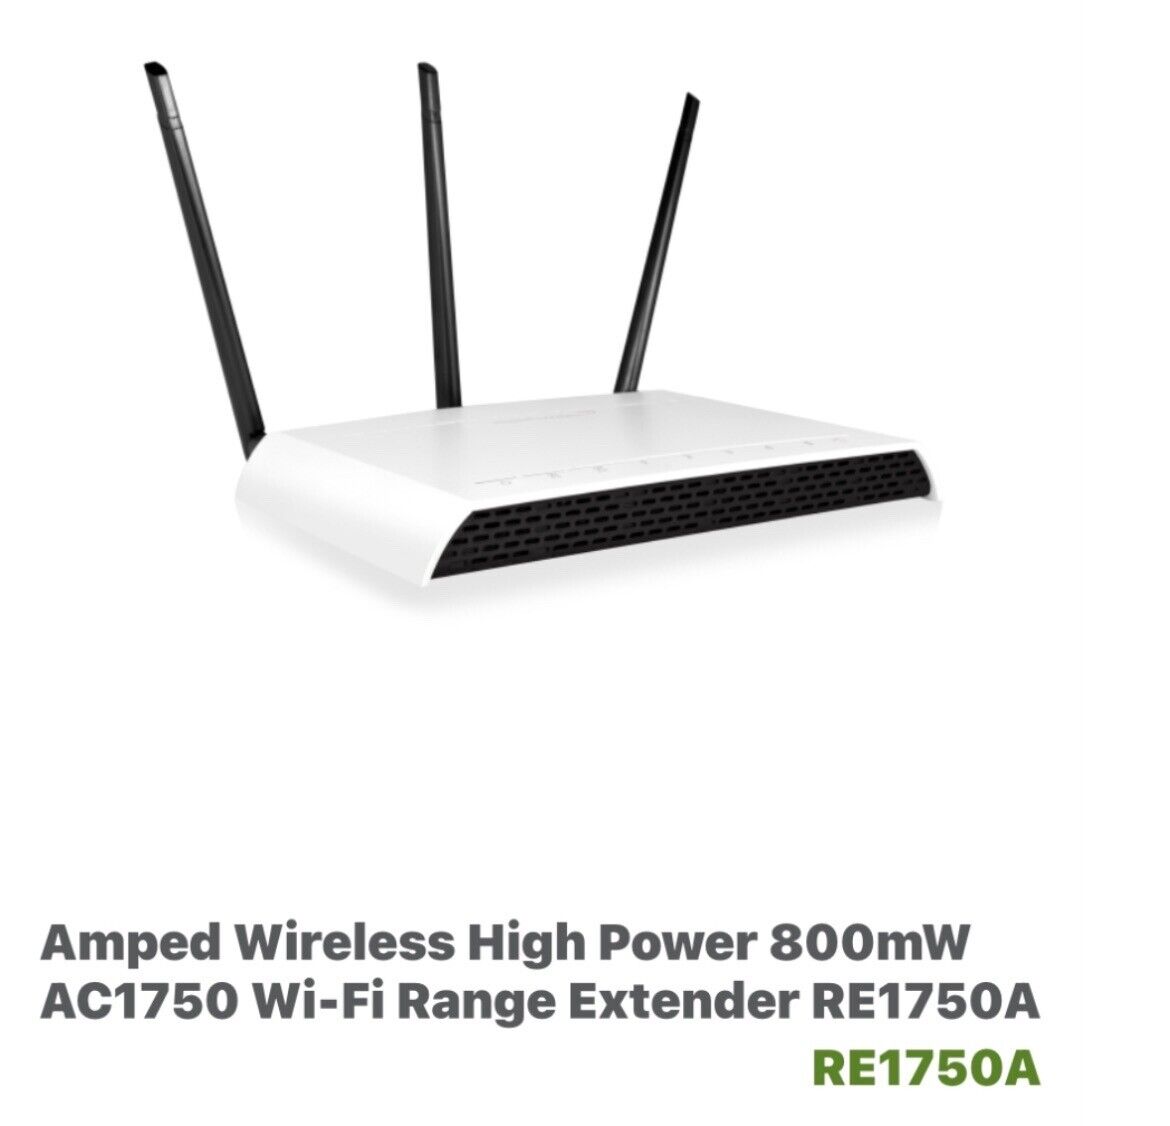 Amped Wireless High Power 800mW AC1750 Wi-Fi Range Extender (RE1750A)